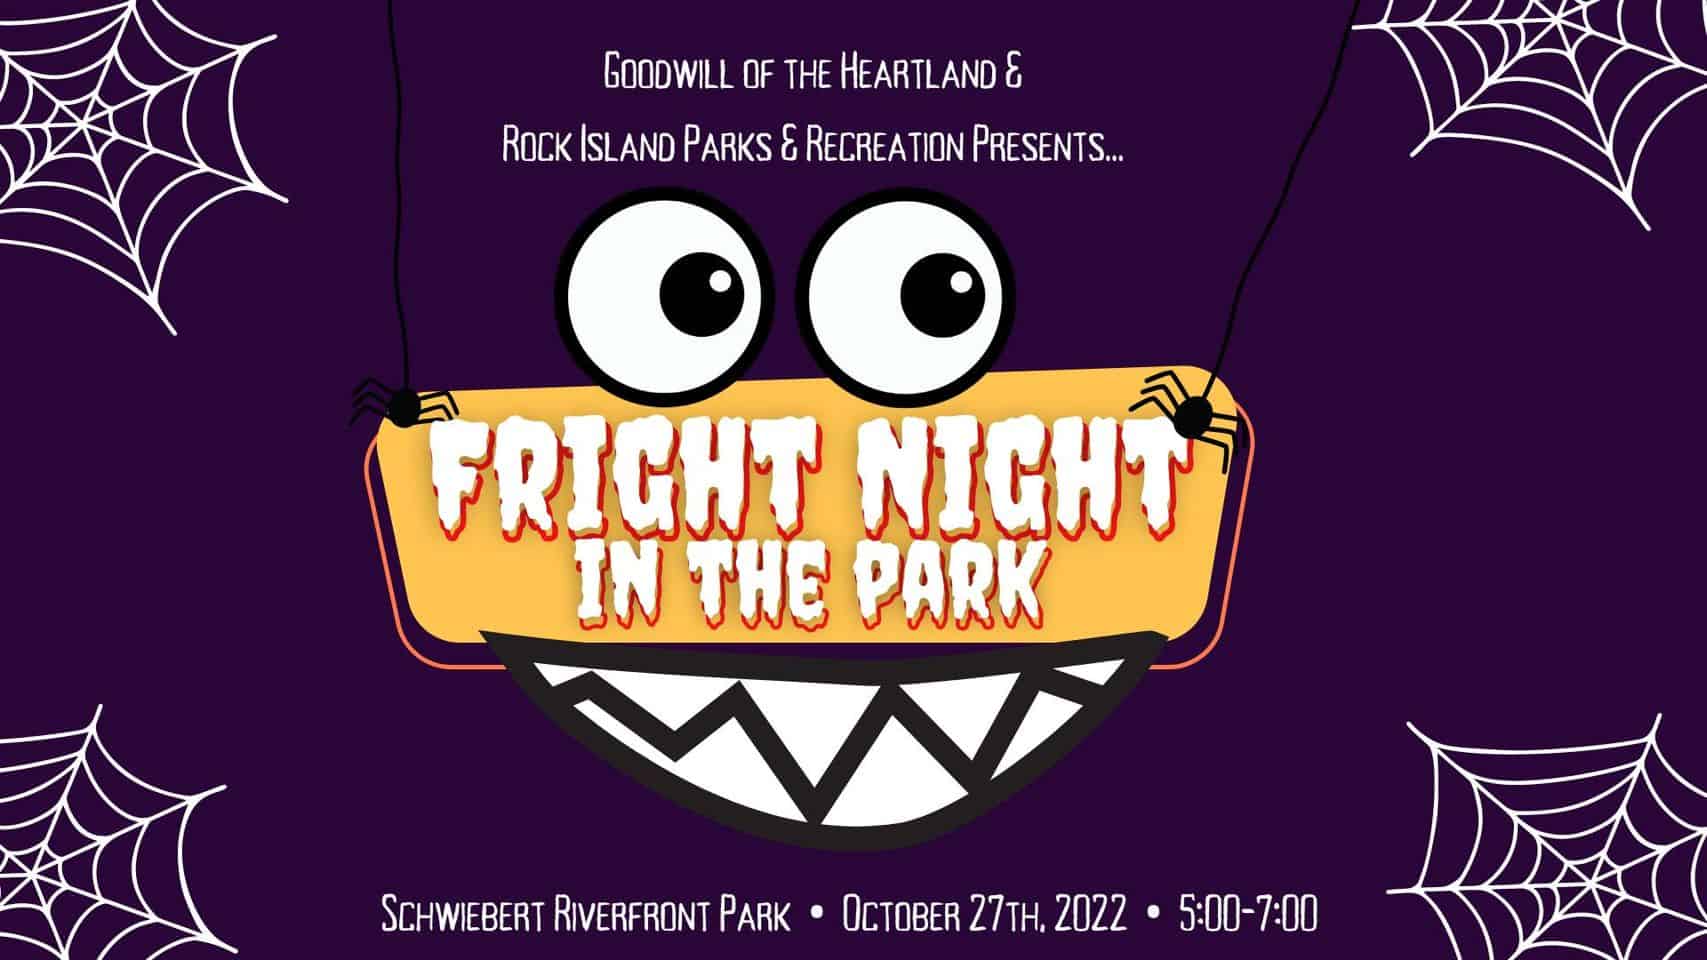 Rock Island Fright Night in the Park logo